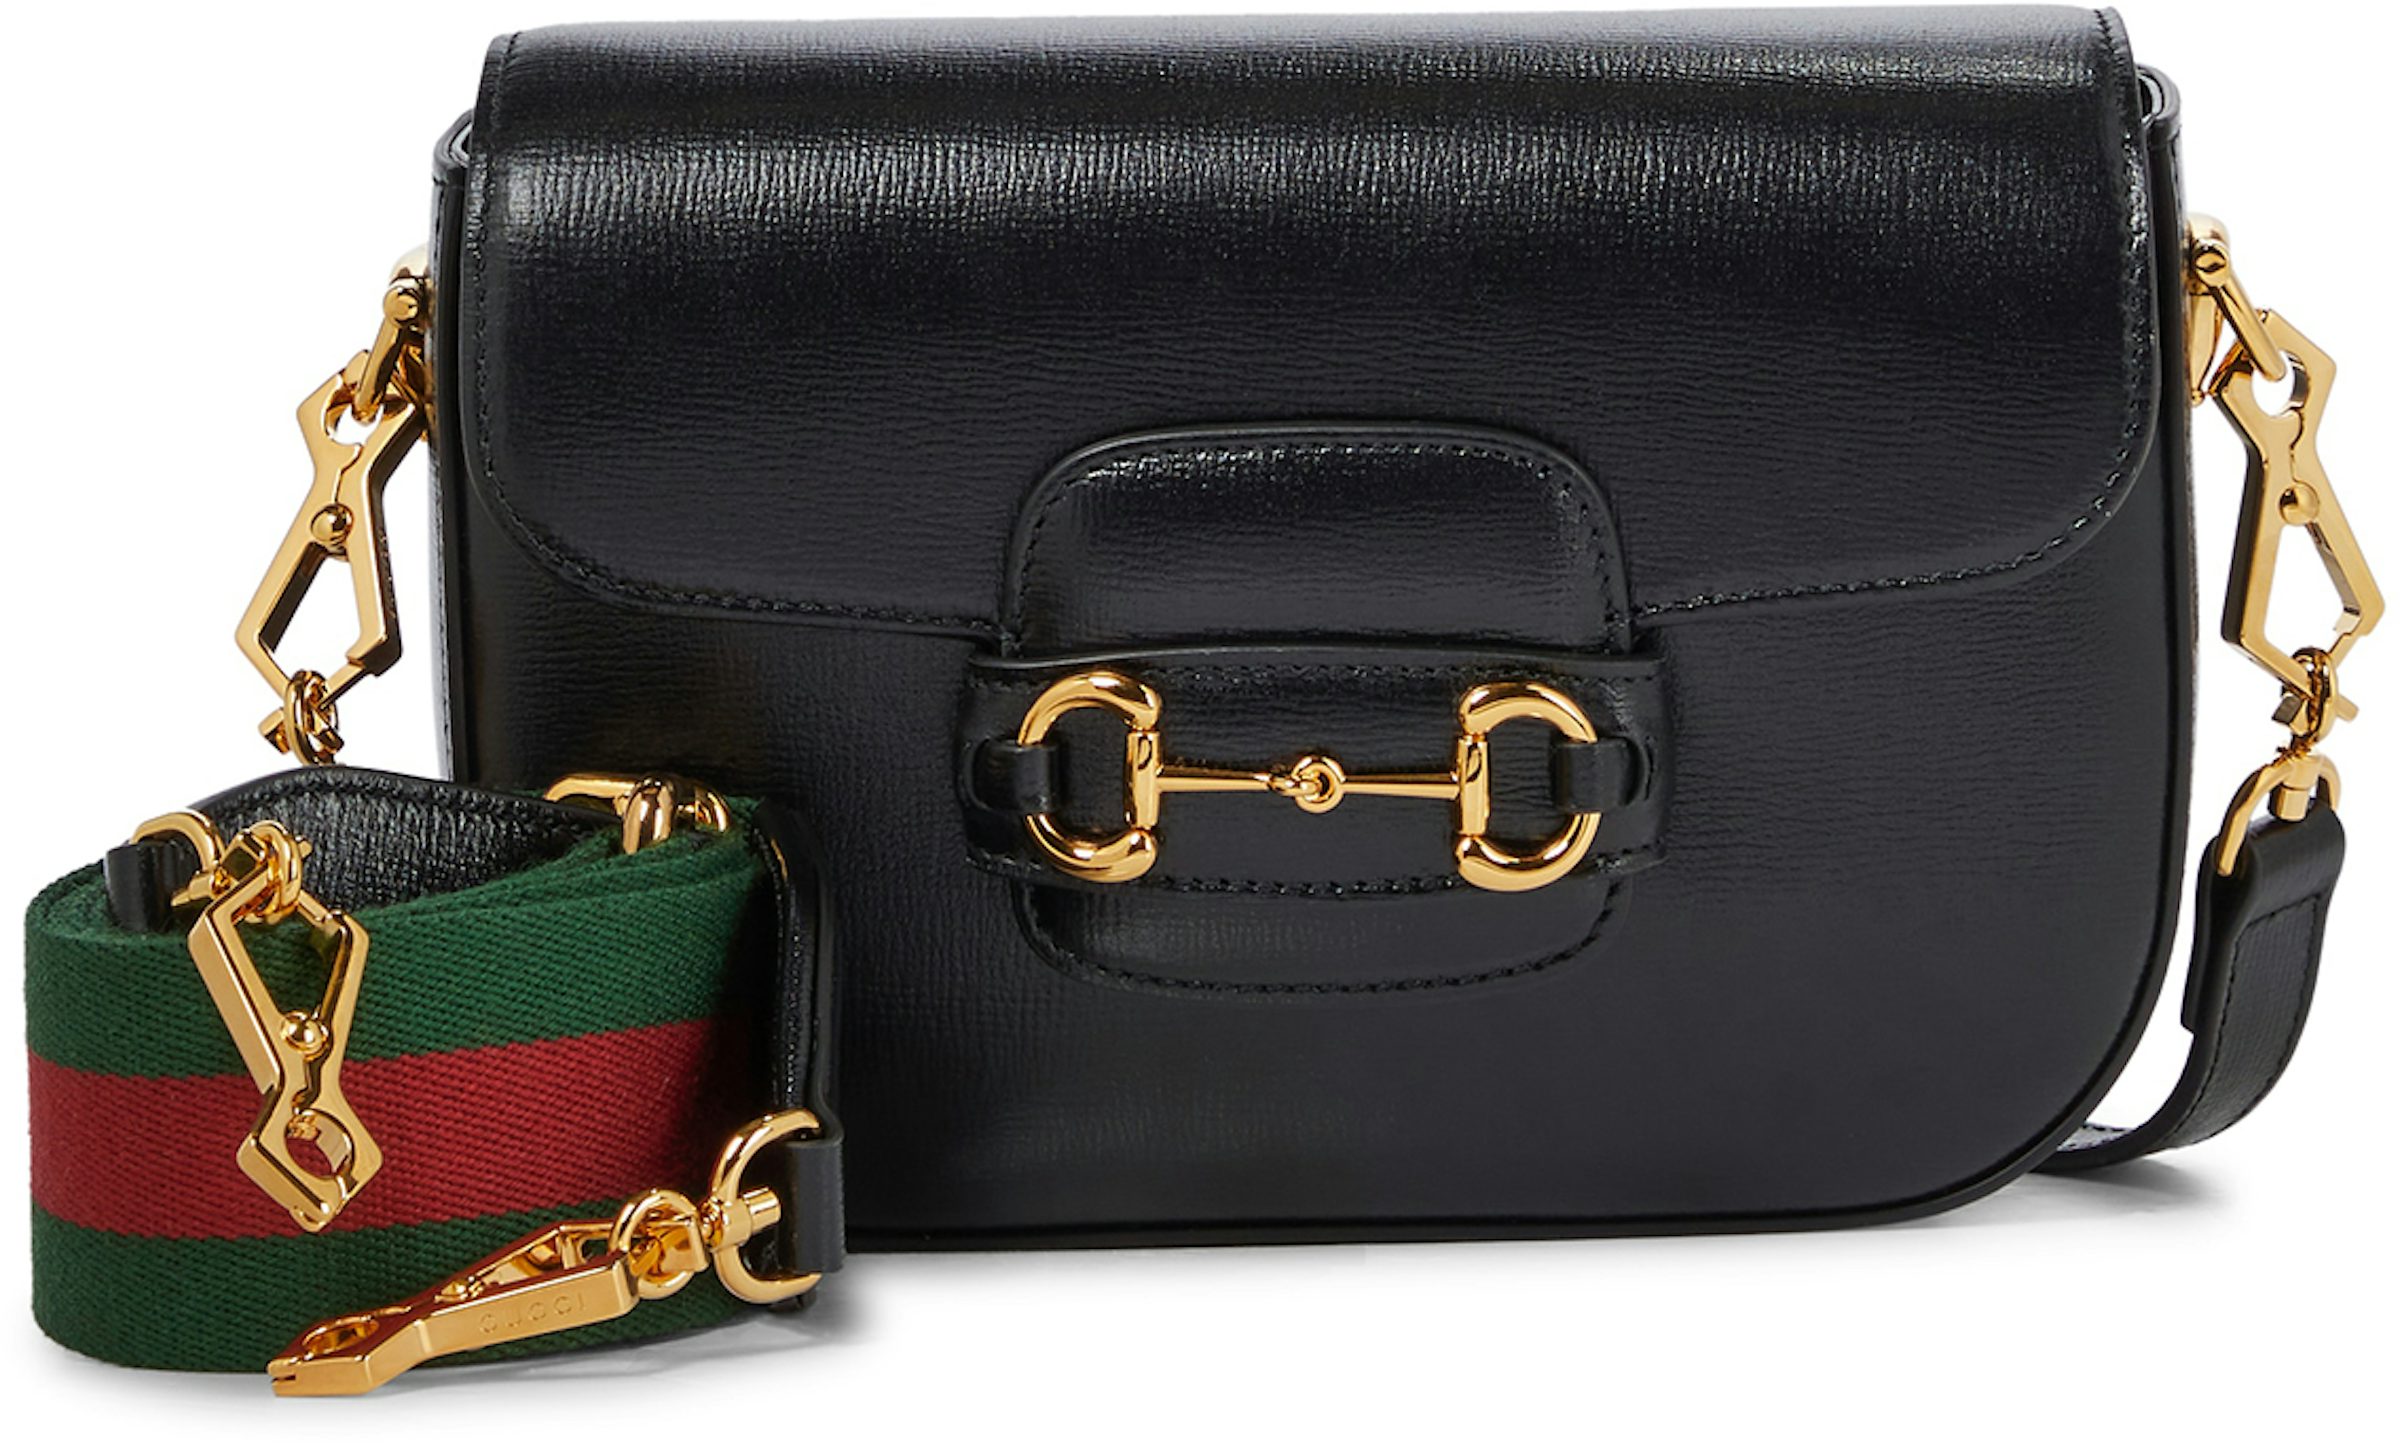 Gucci 1955 Horsebit Leather Shoulder Bag